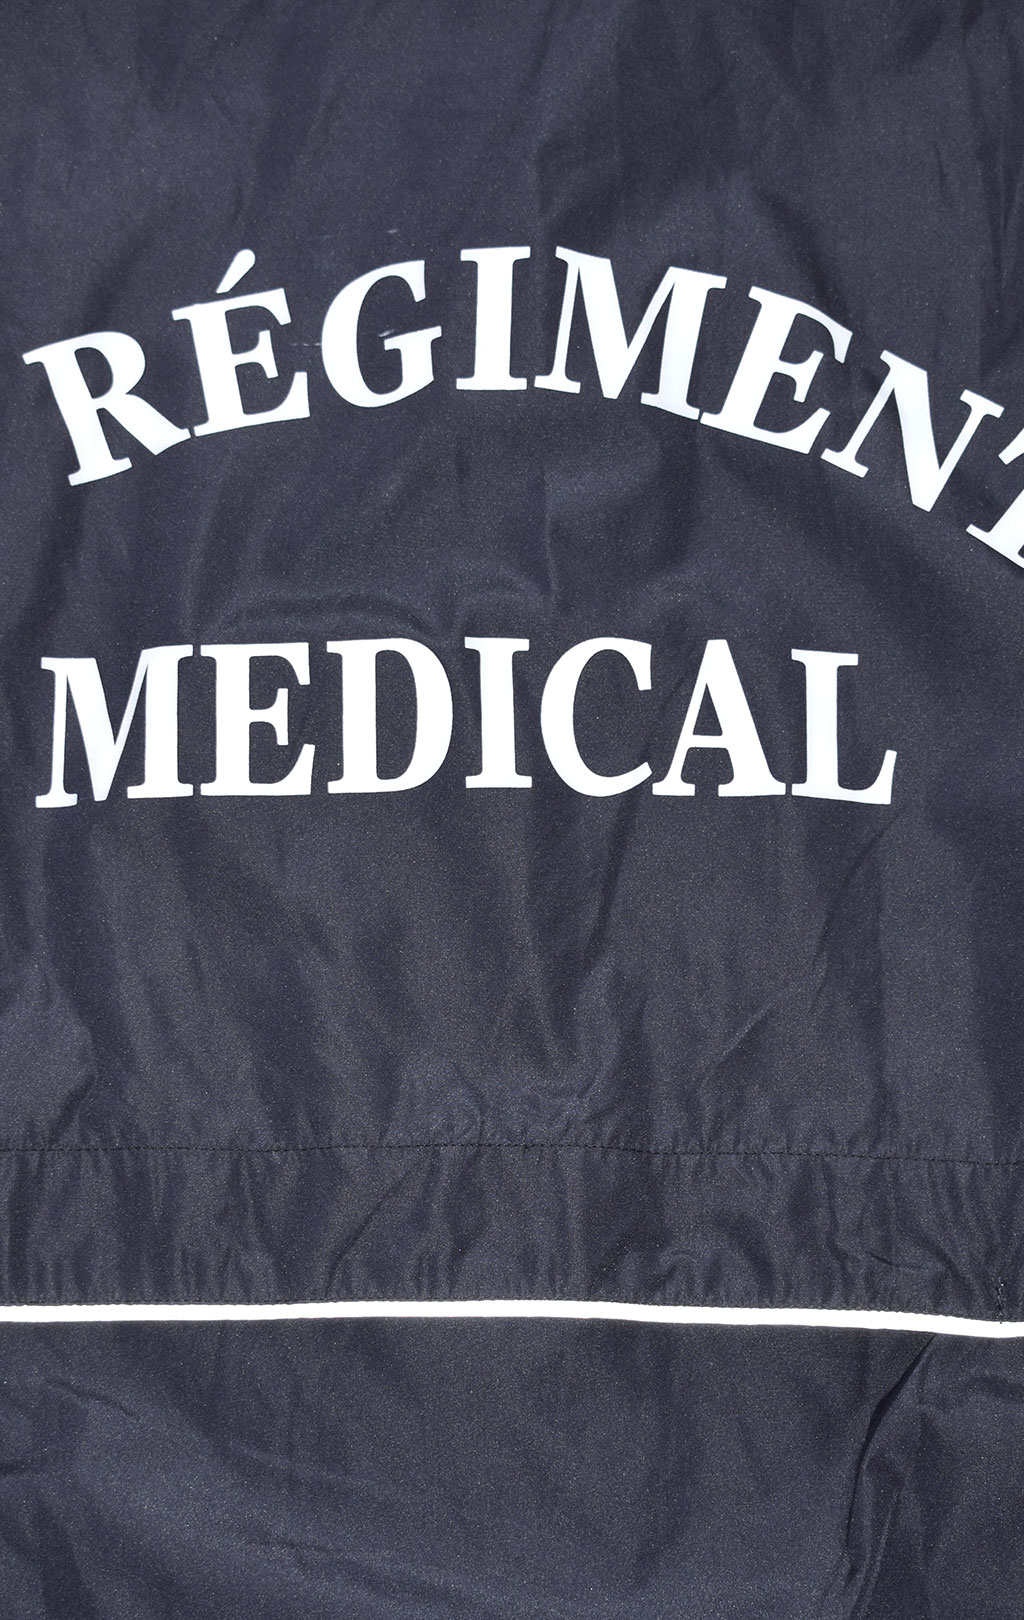 Ветровка 3e REGIMENT MEDICAL navy Франция